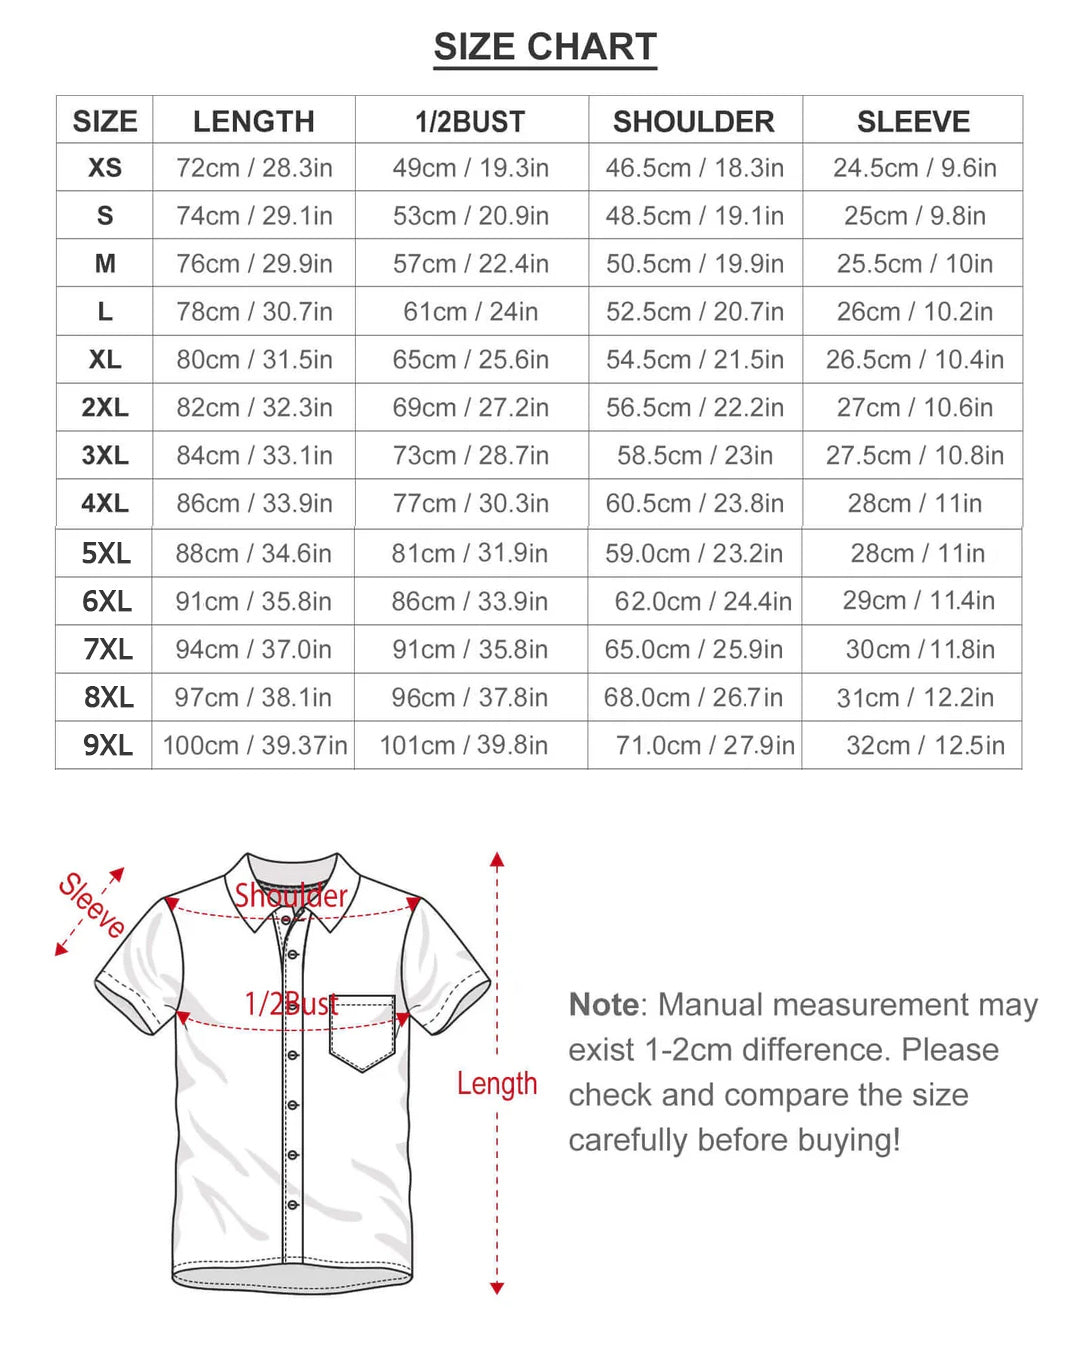 Men's Tangram Casual Short Sleeve Shirt 2403000090